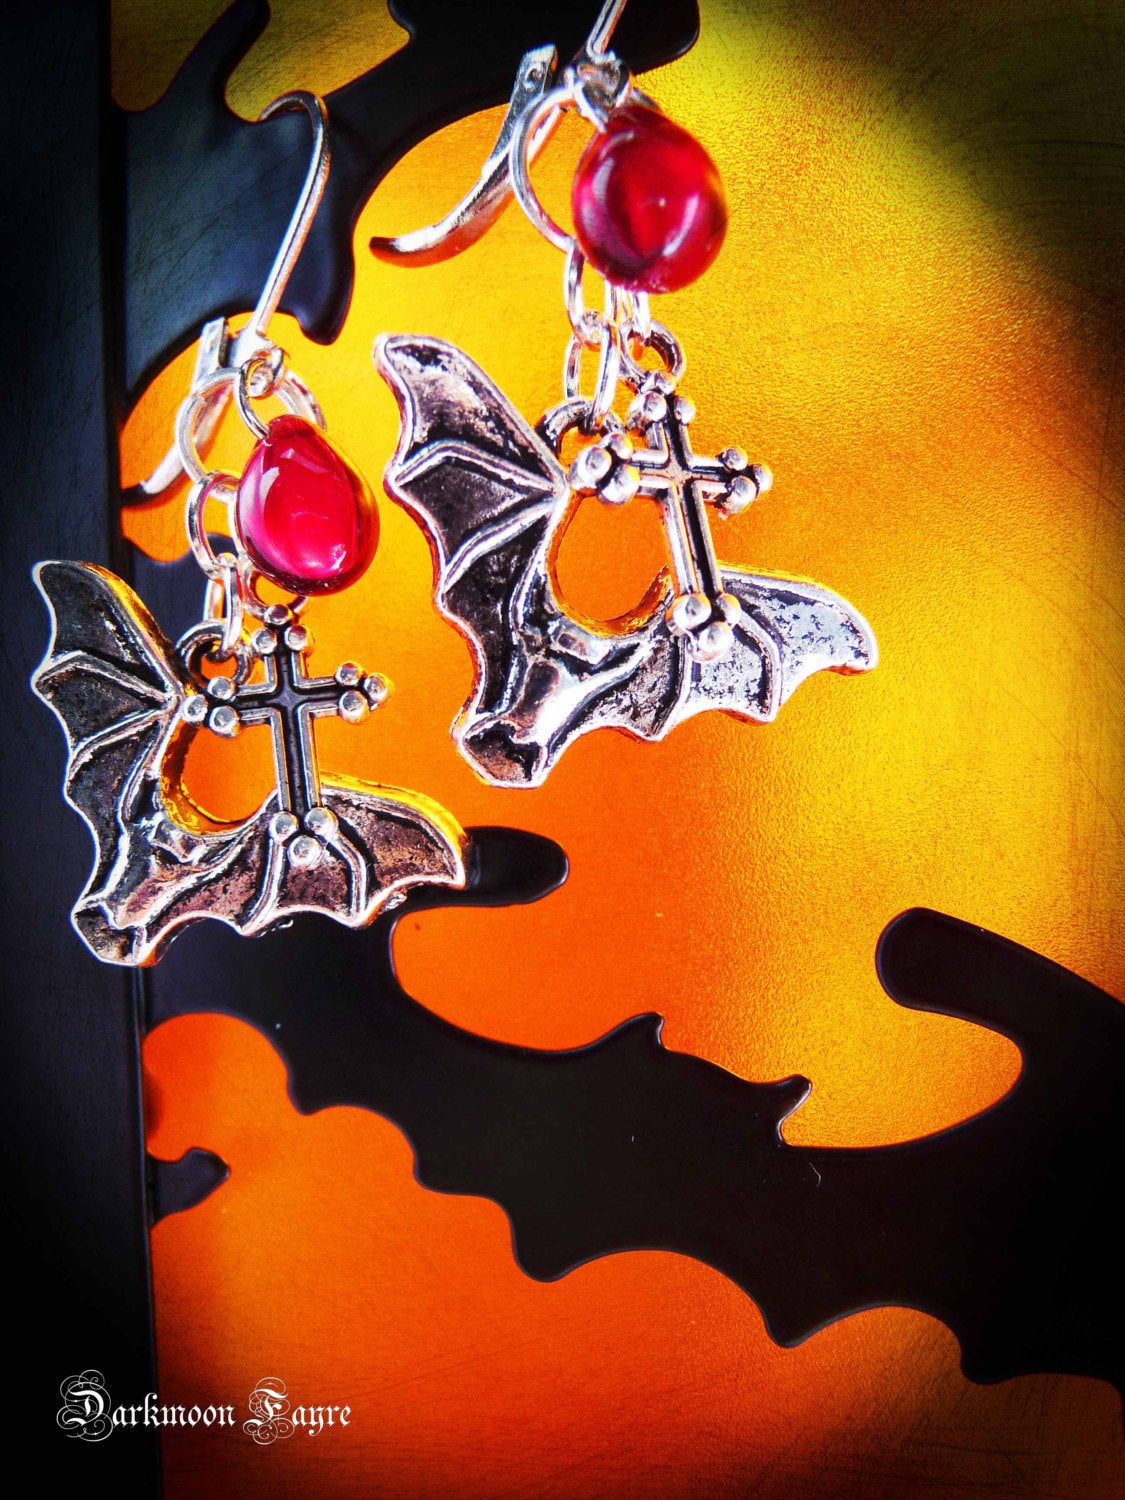 Vampire Slayer Earrings. Bats, Glass Blood Drops & Crosses. Vampire Hunter Gothic Everyday Earrings - Darkmoon Fayre